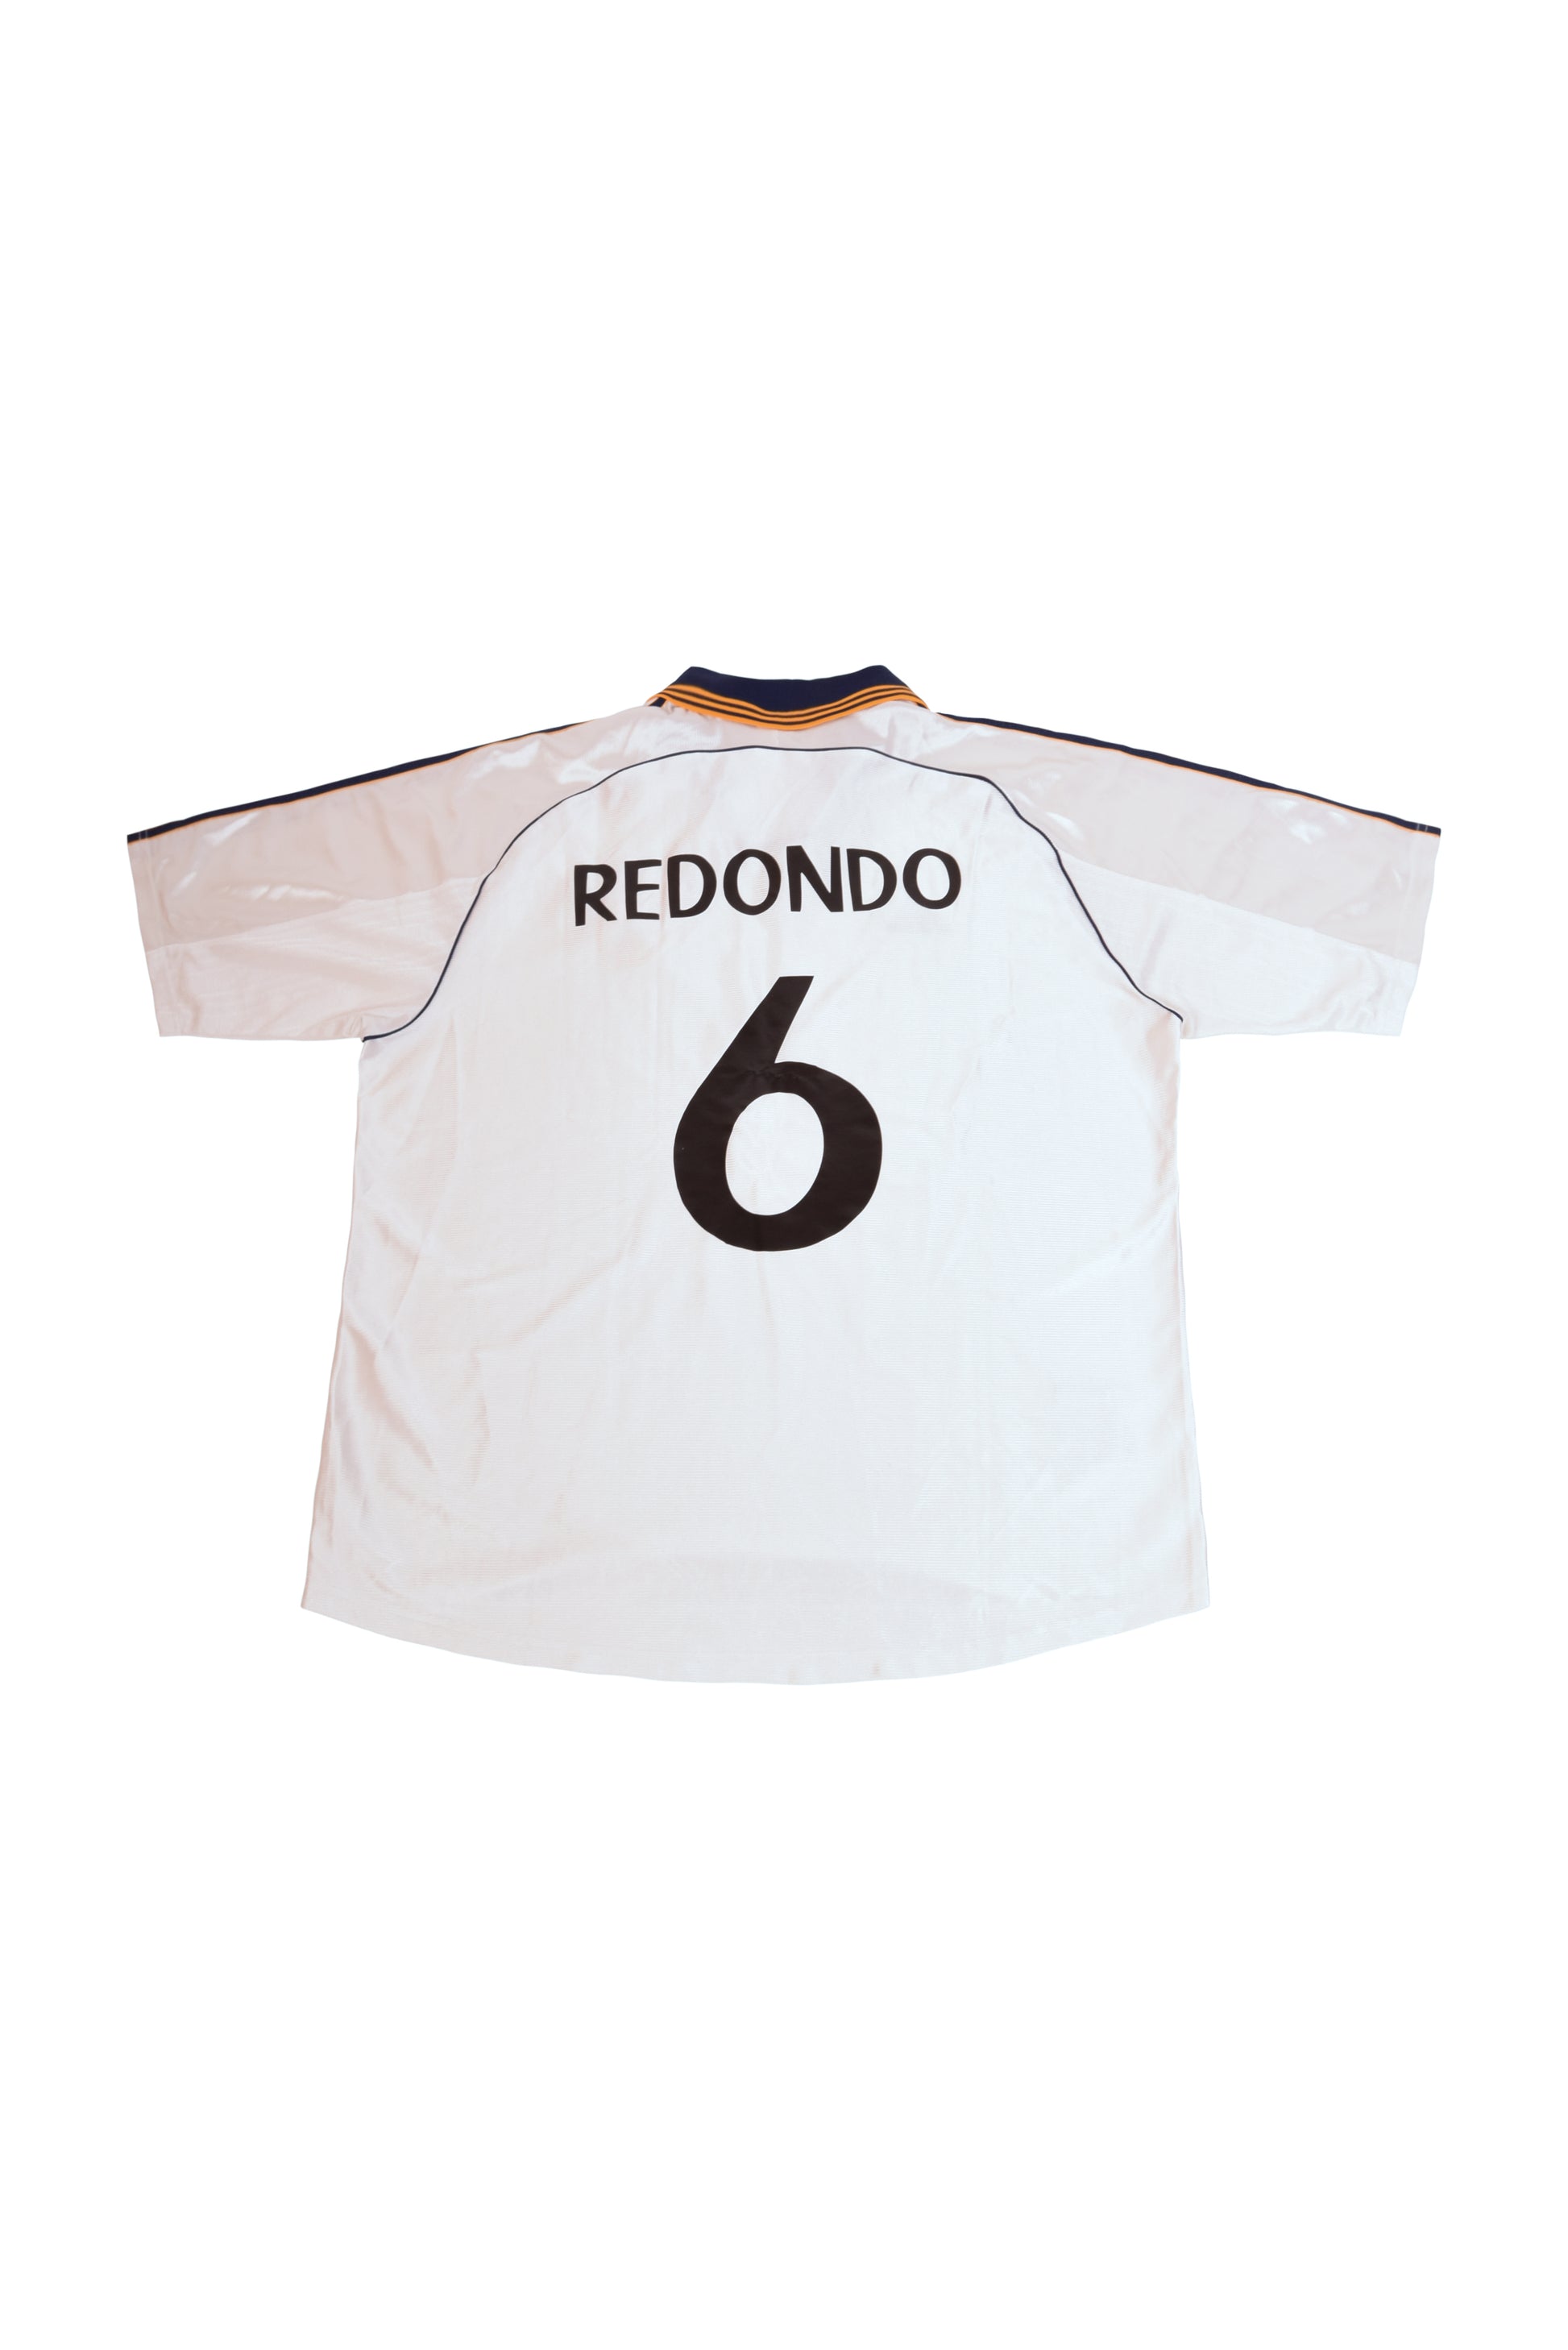 Vintage Real Madrid Redondo Adidas '98-'99 Home Football Shirt No. 6 Size XL White